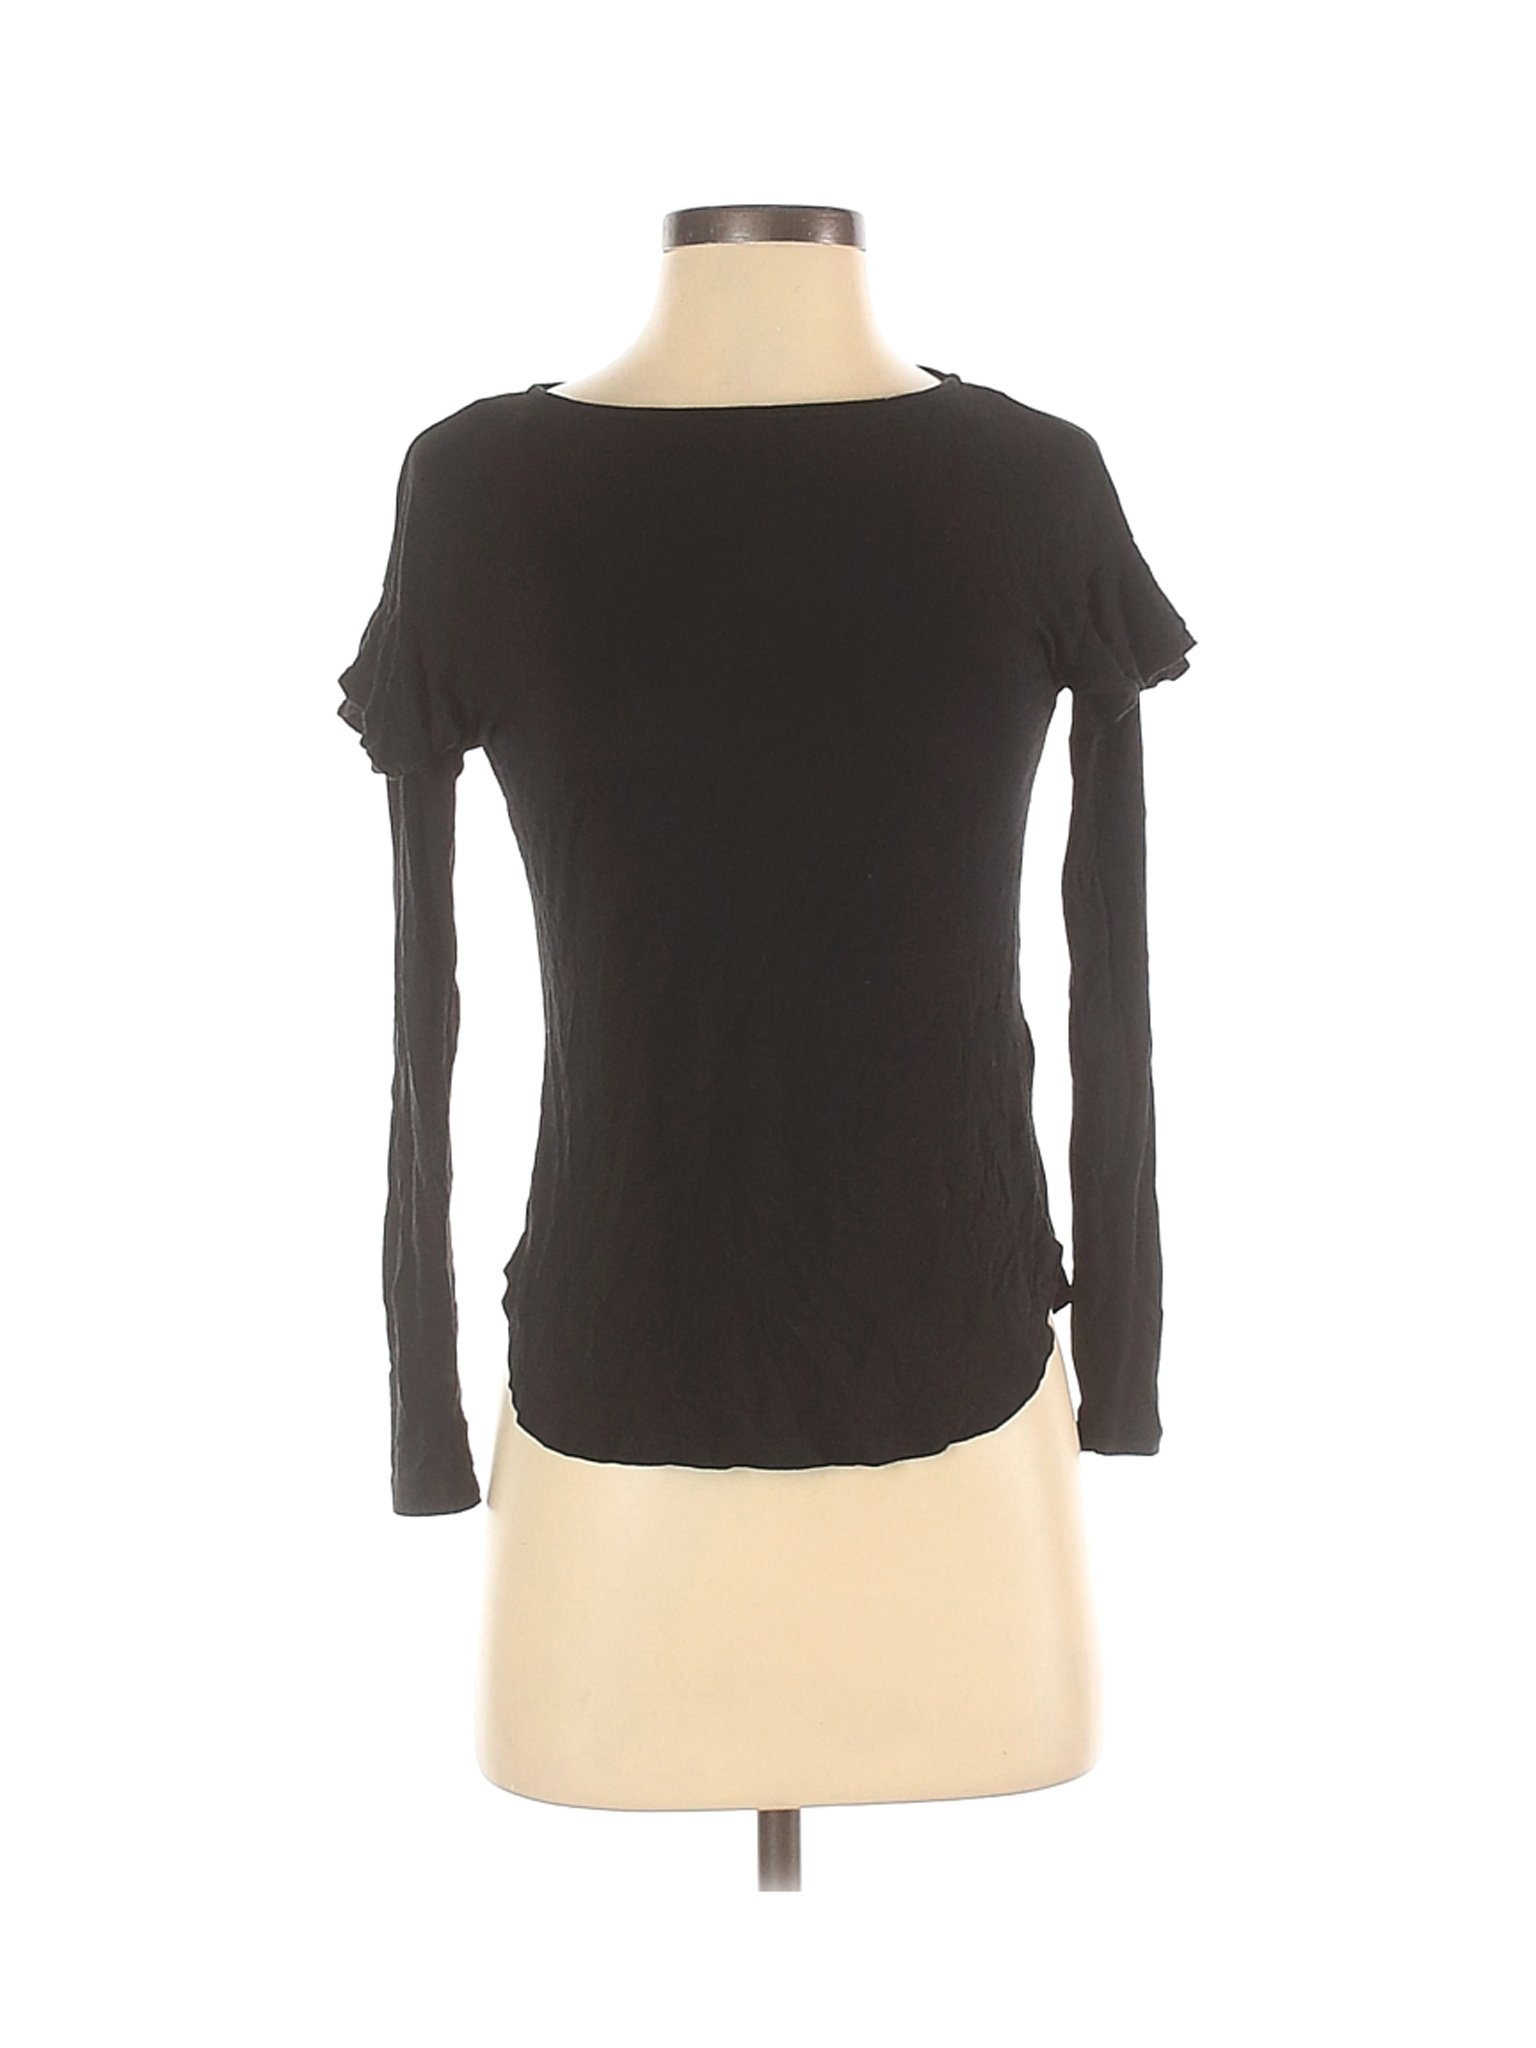 H&M Women Black Long Sleeve T-Shirt XS | eBay